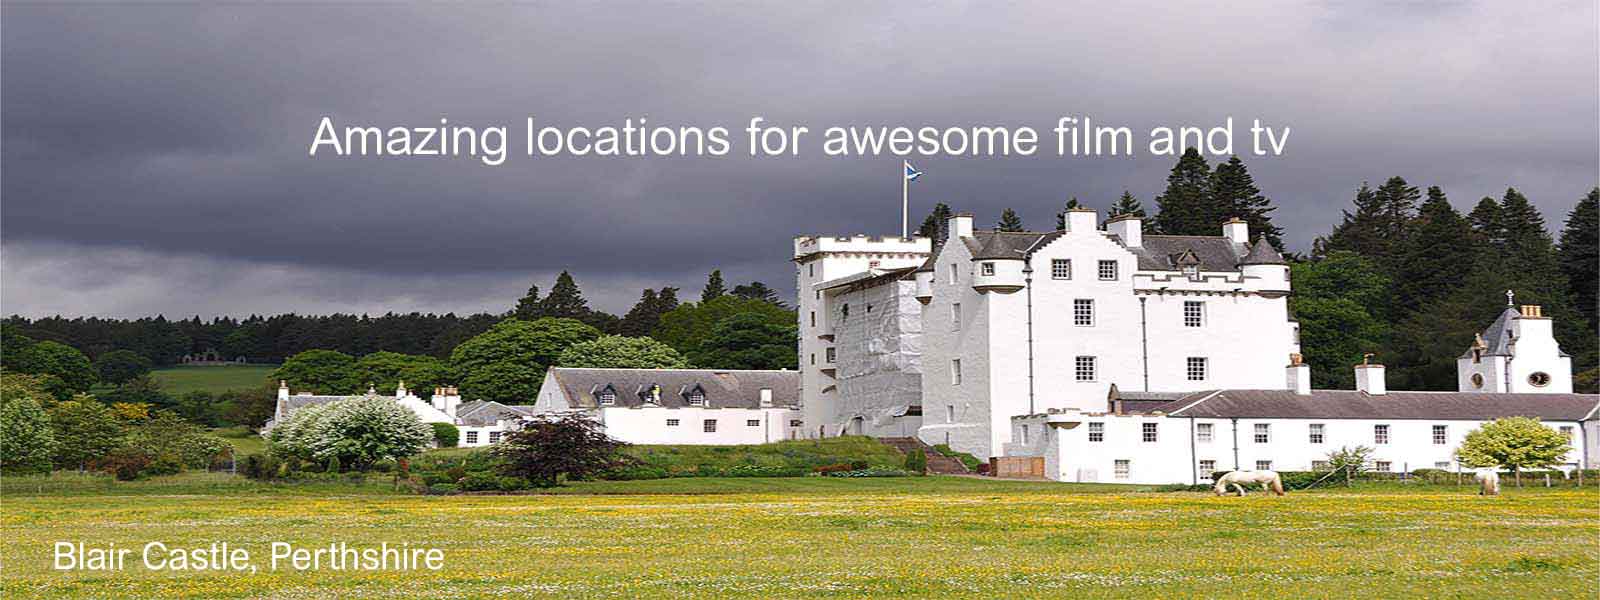 Blair-Castle_Perthshire_Scotland